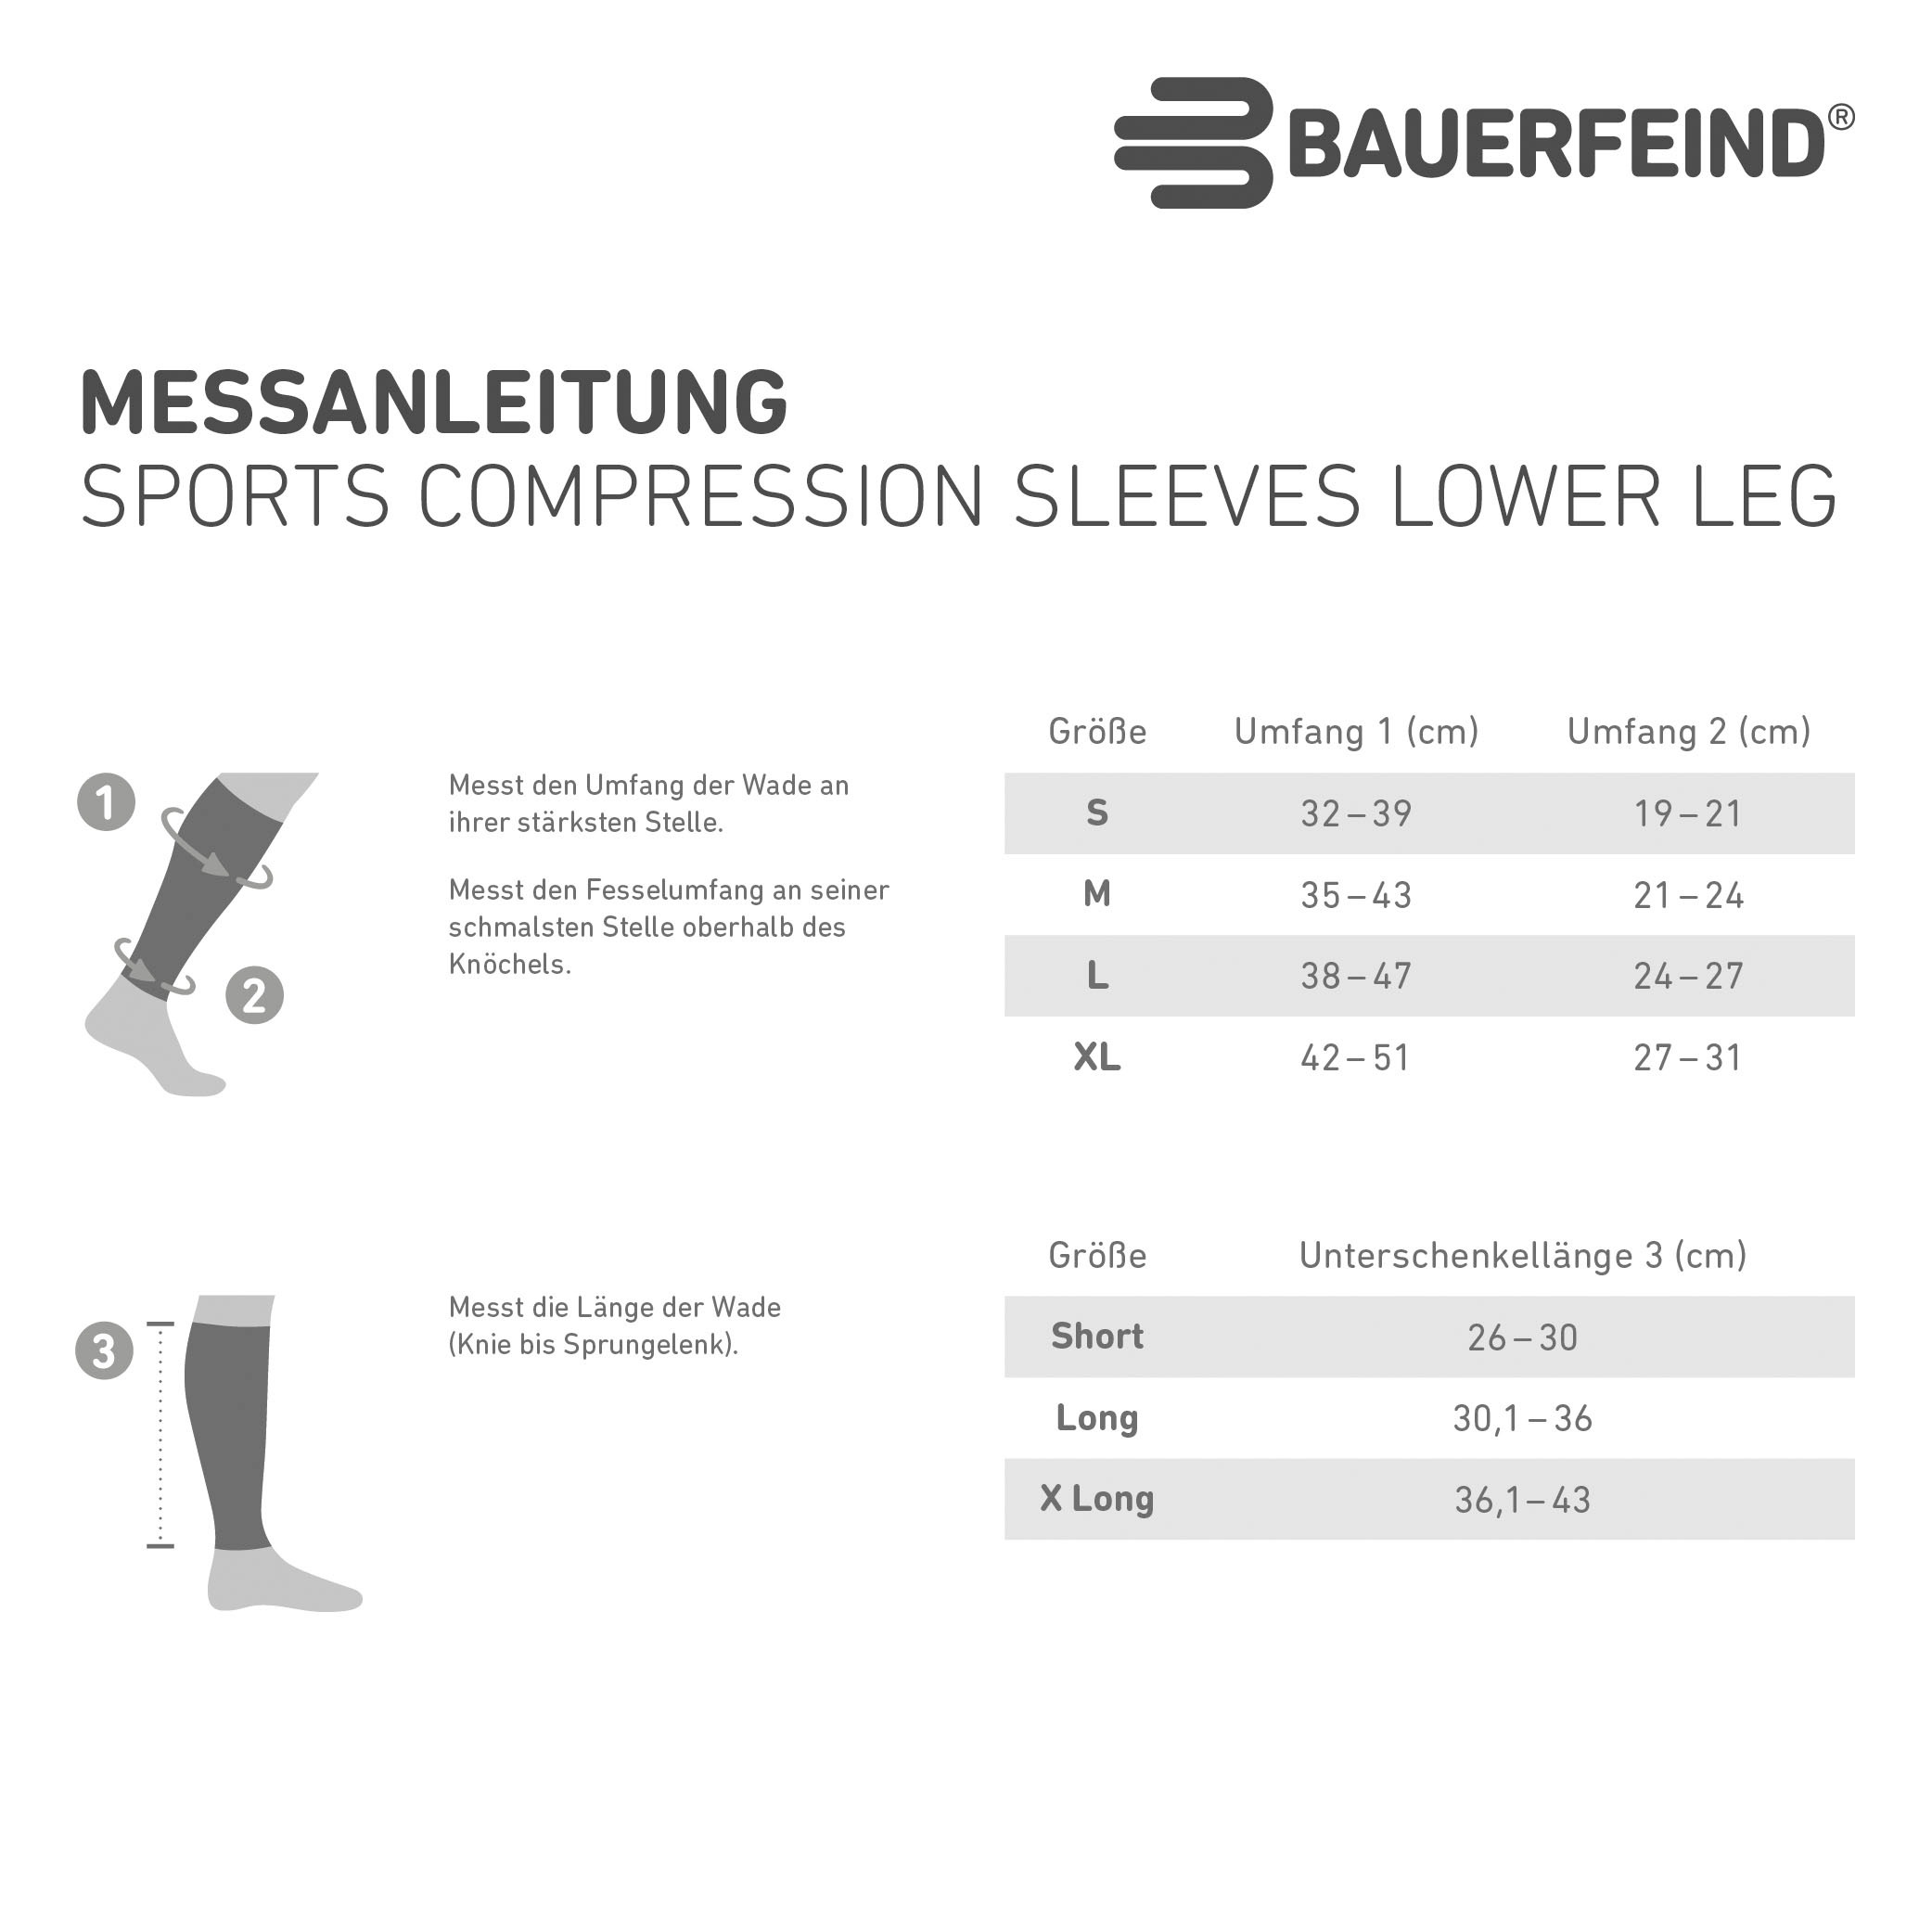 Bauerfeind Bandage "Compression Sleeves Lower Leg" 3